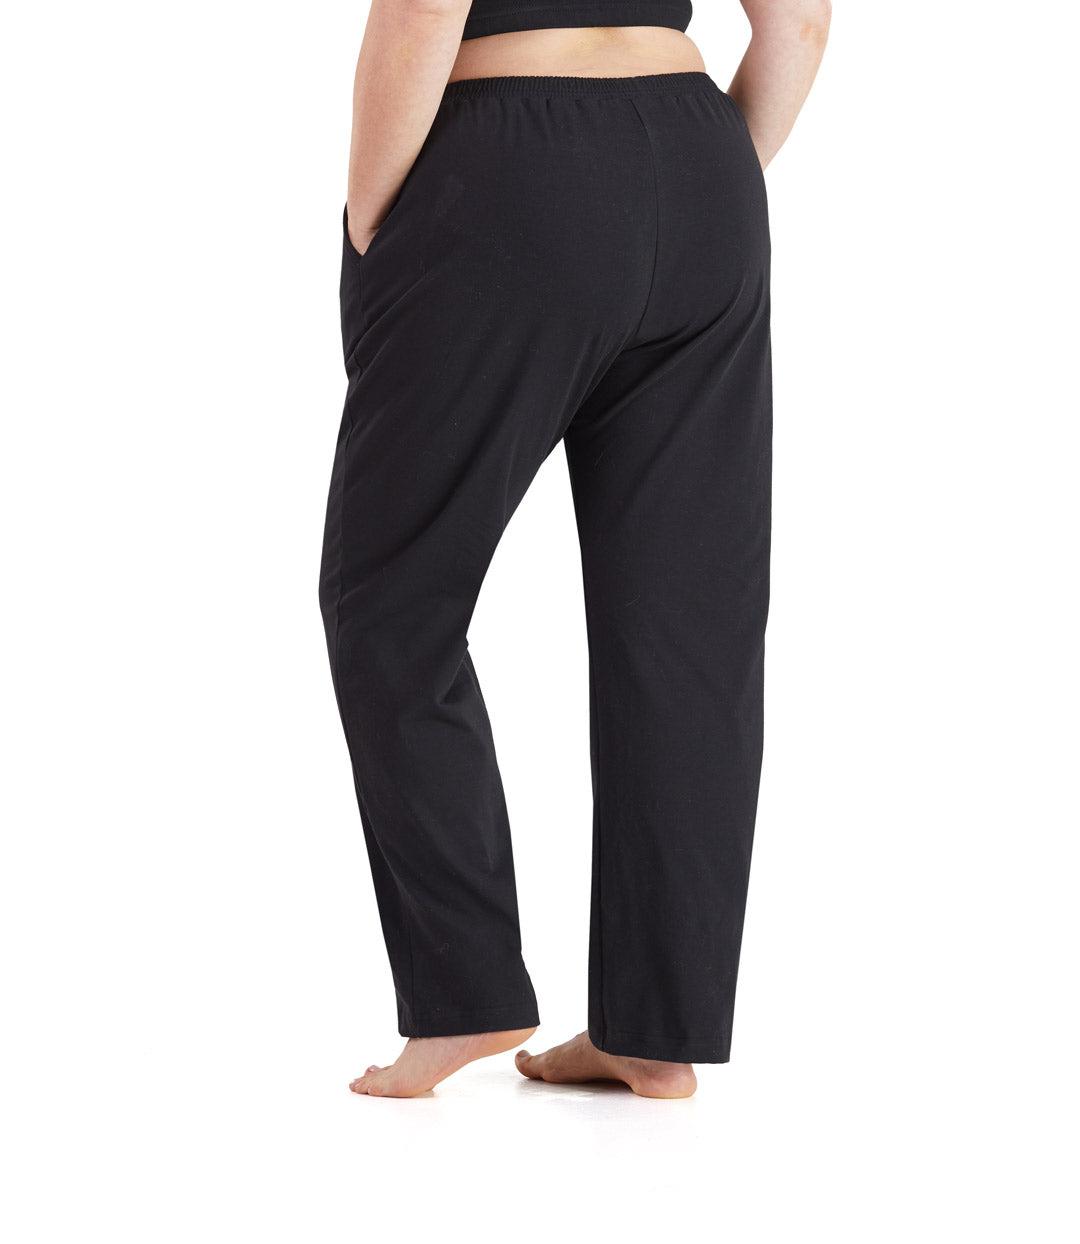 Bottom half of plus sized woman, back view, wearing JunoActive UltraKnit Slash Pocket Pant in color black. Bottom hem is at the ankle. 